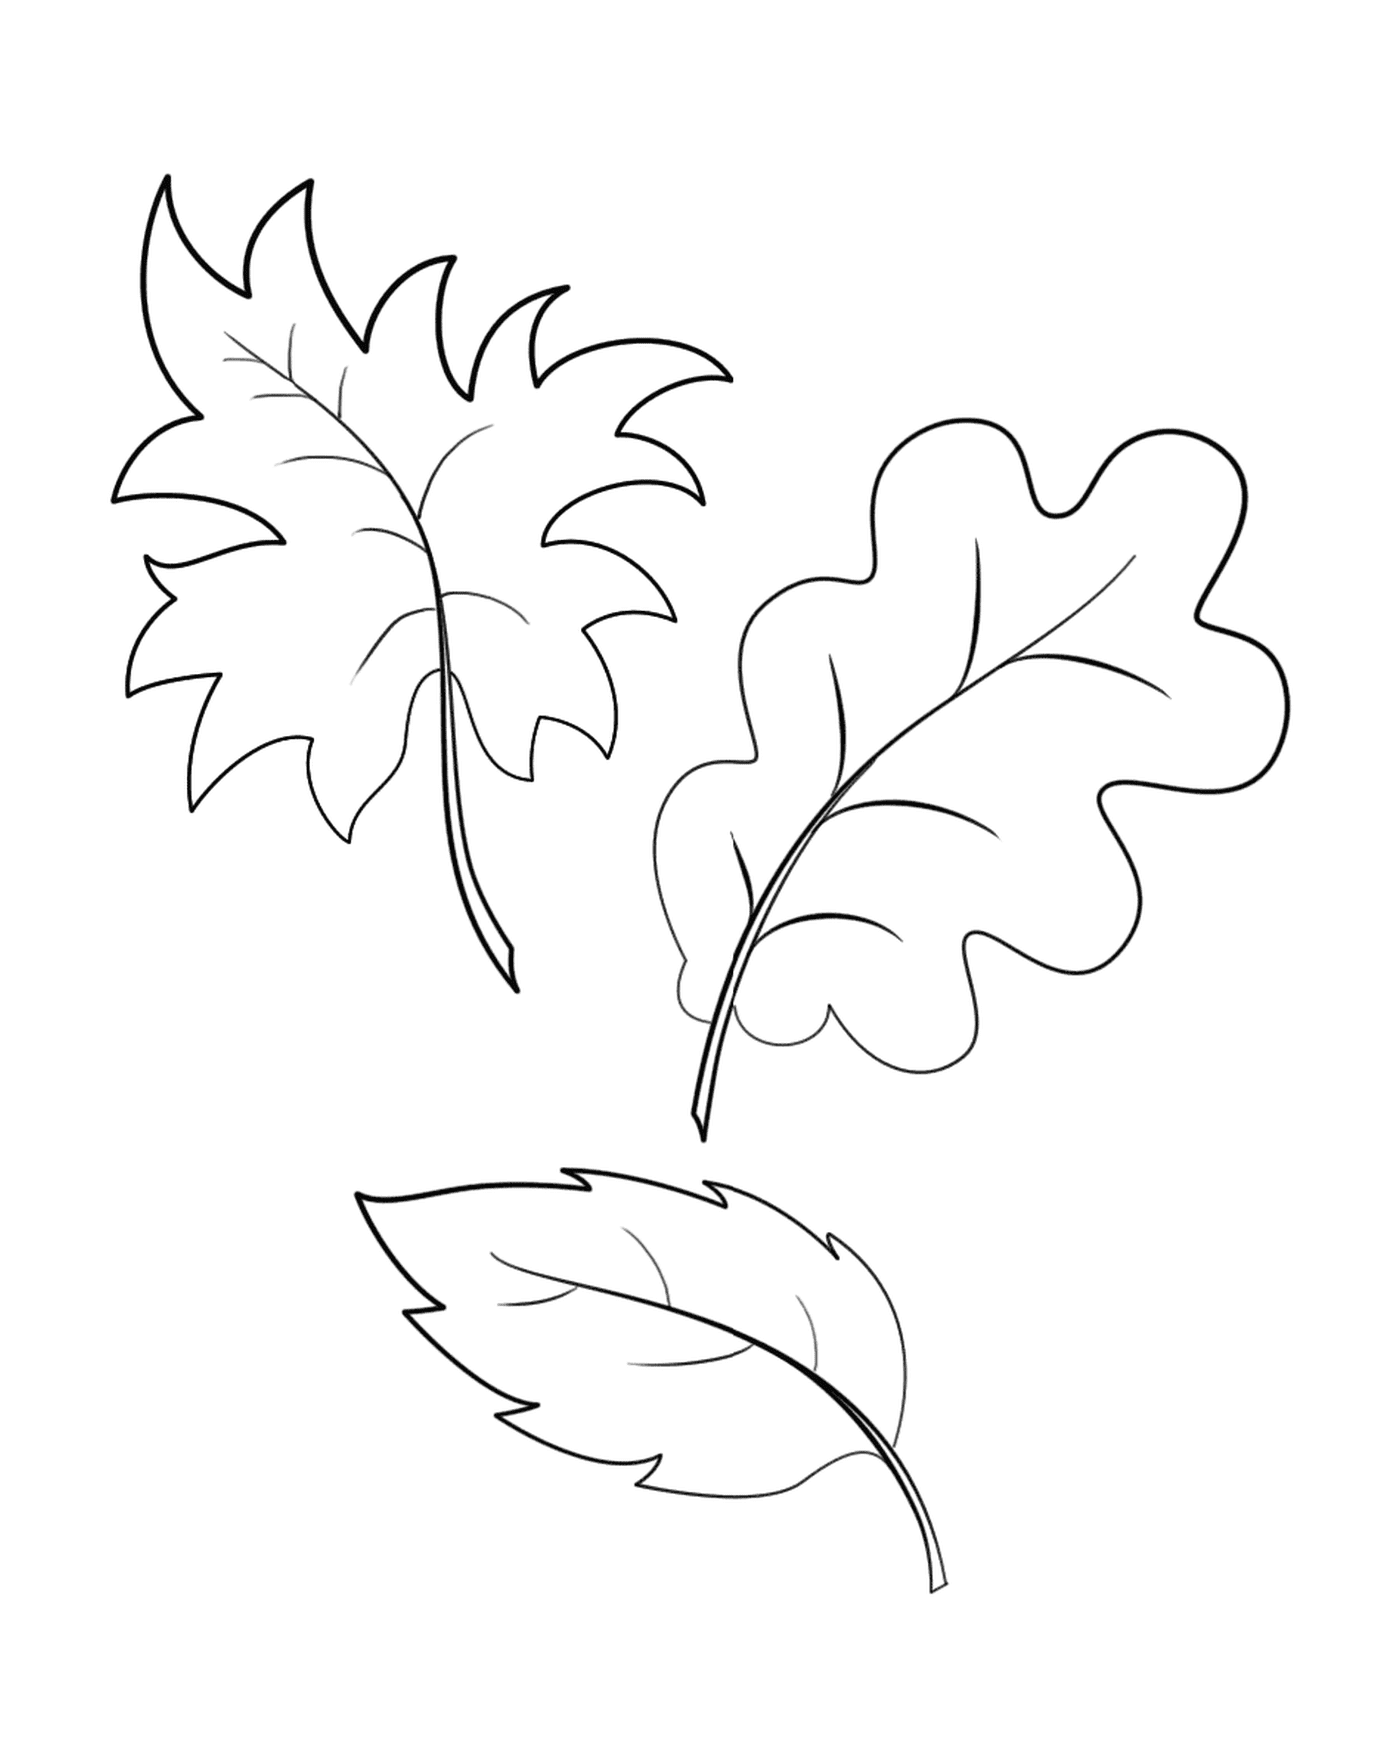  Tres hojas dibujadas 